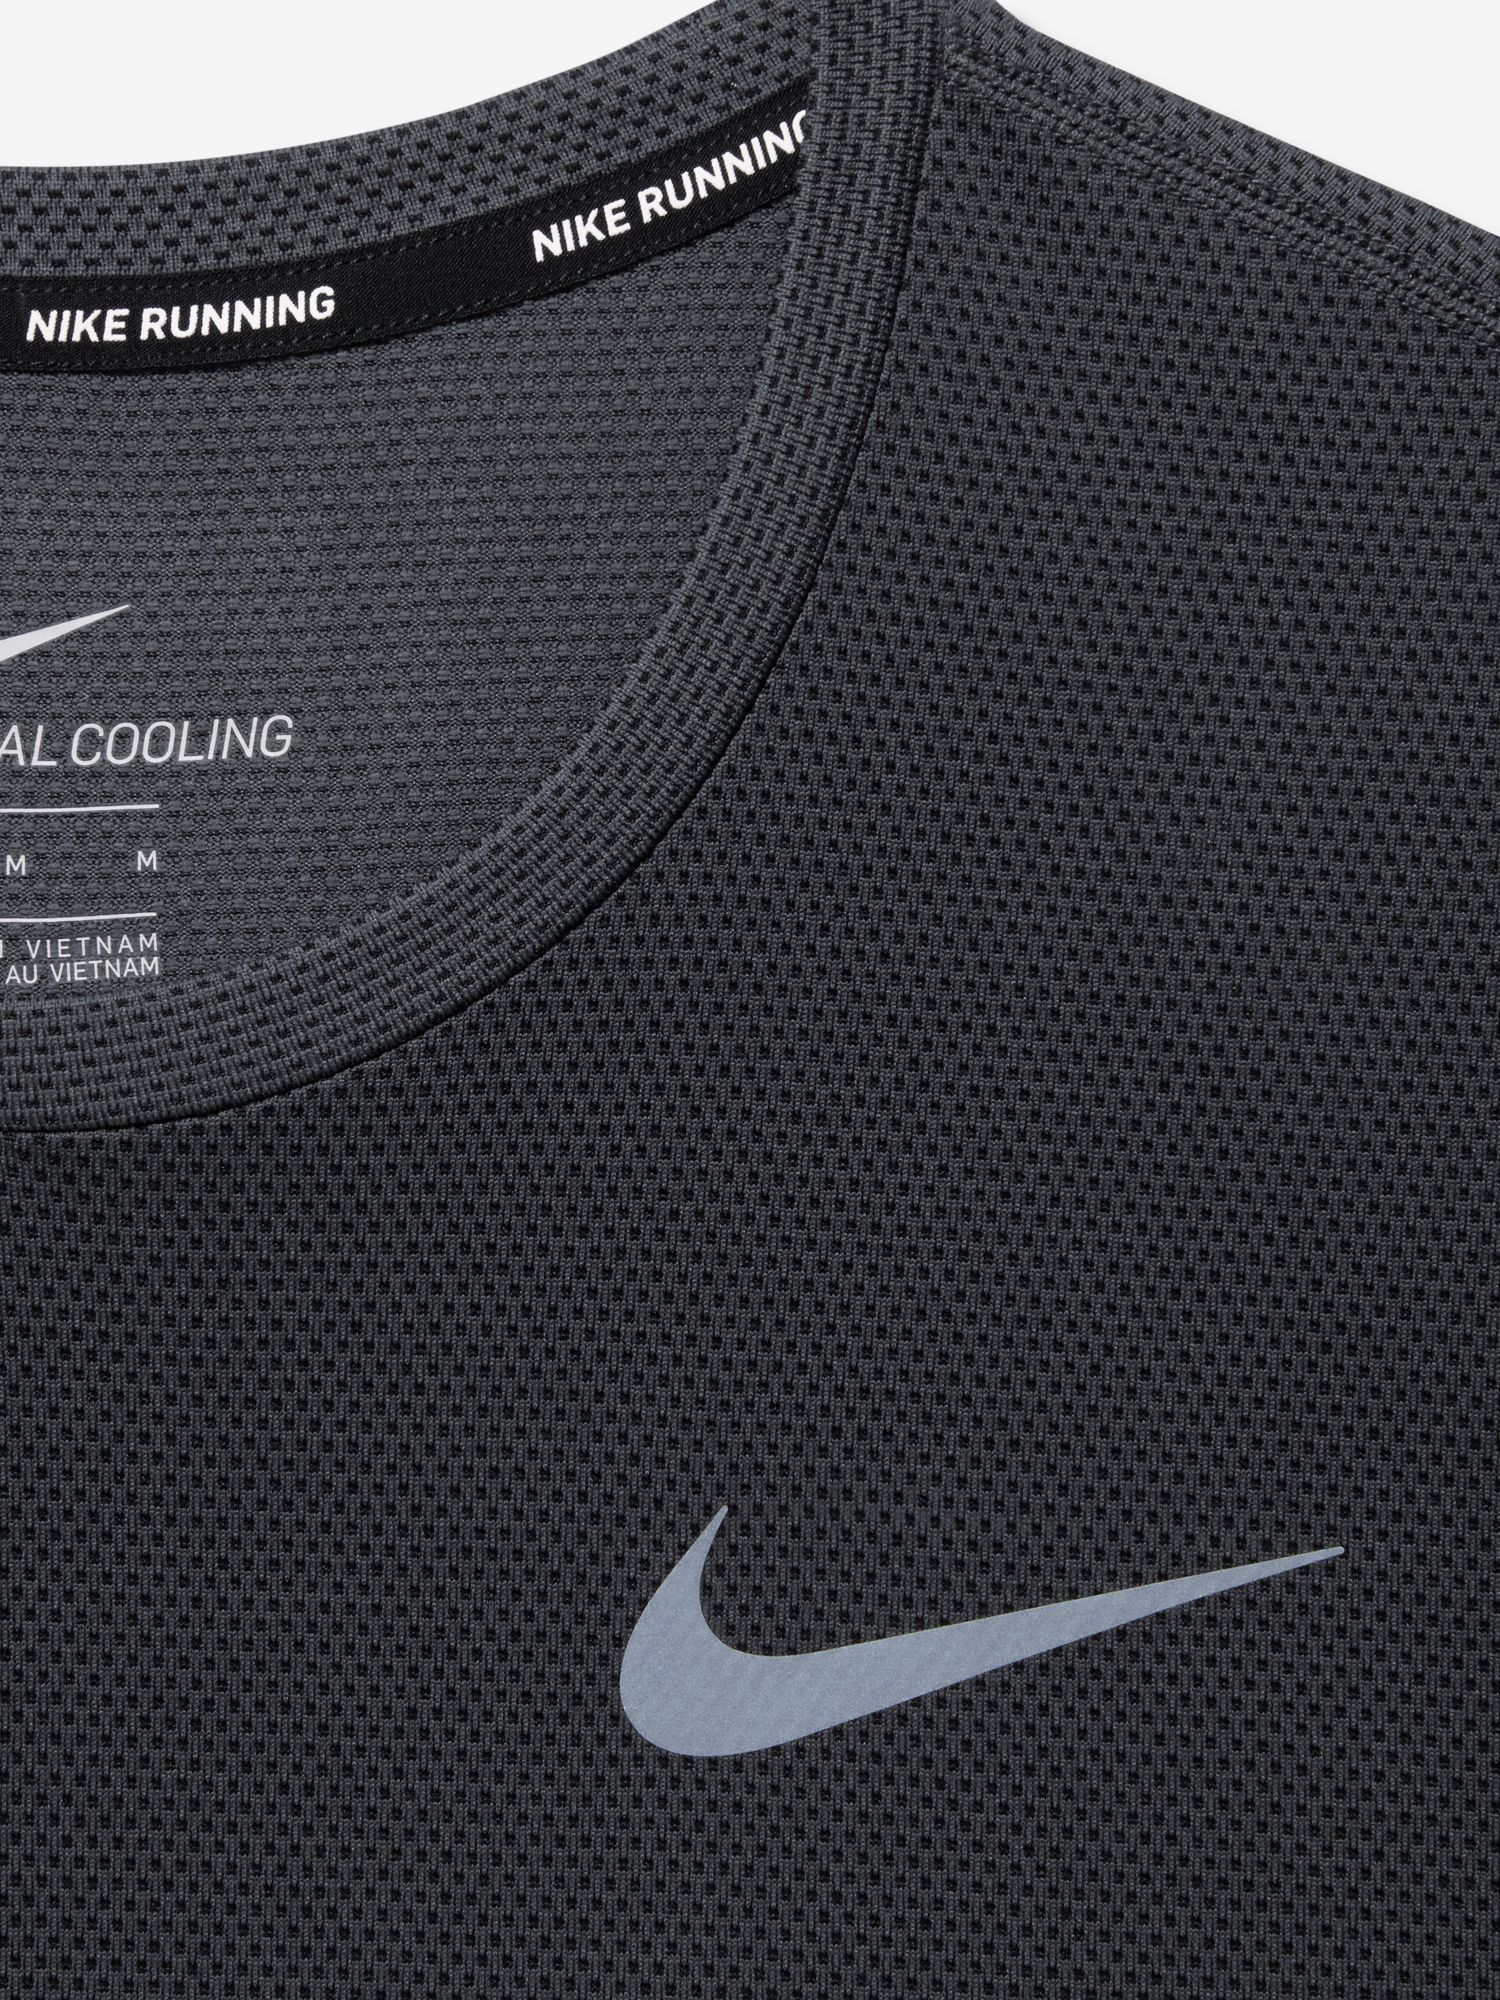 Nike Zonal Cooling Relay Running Top, Grey